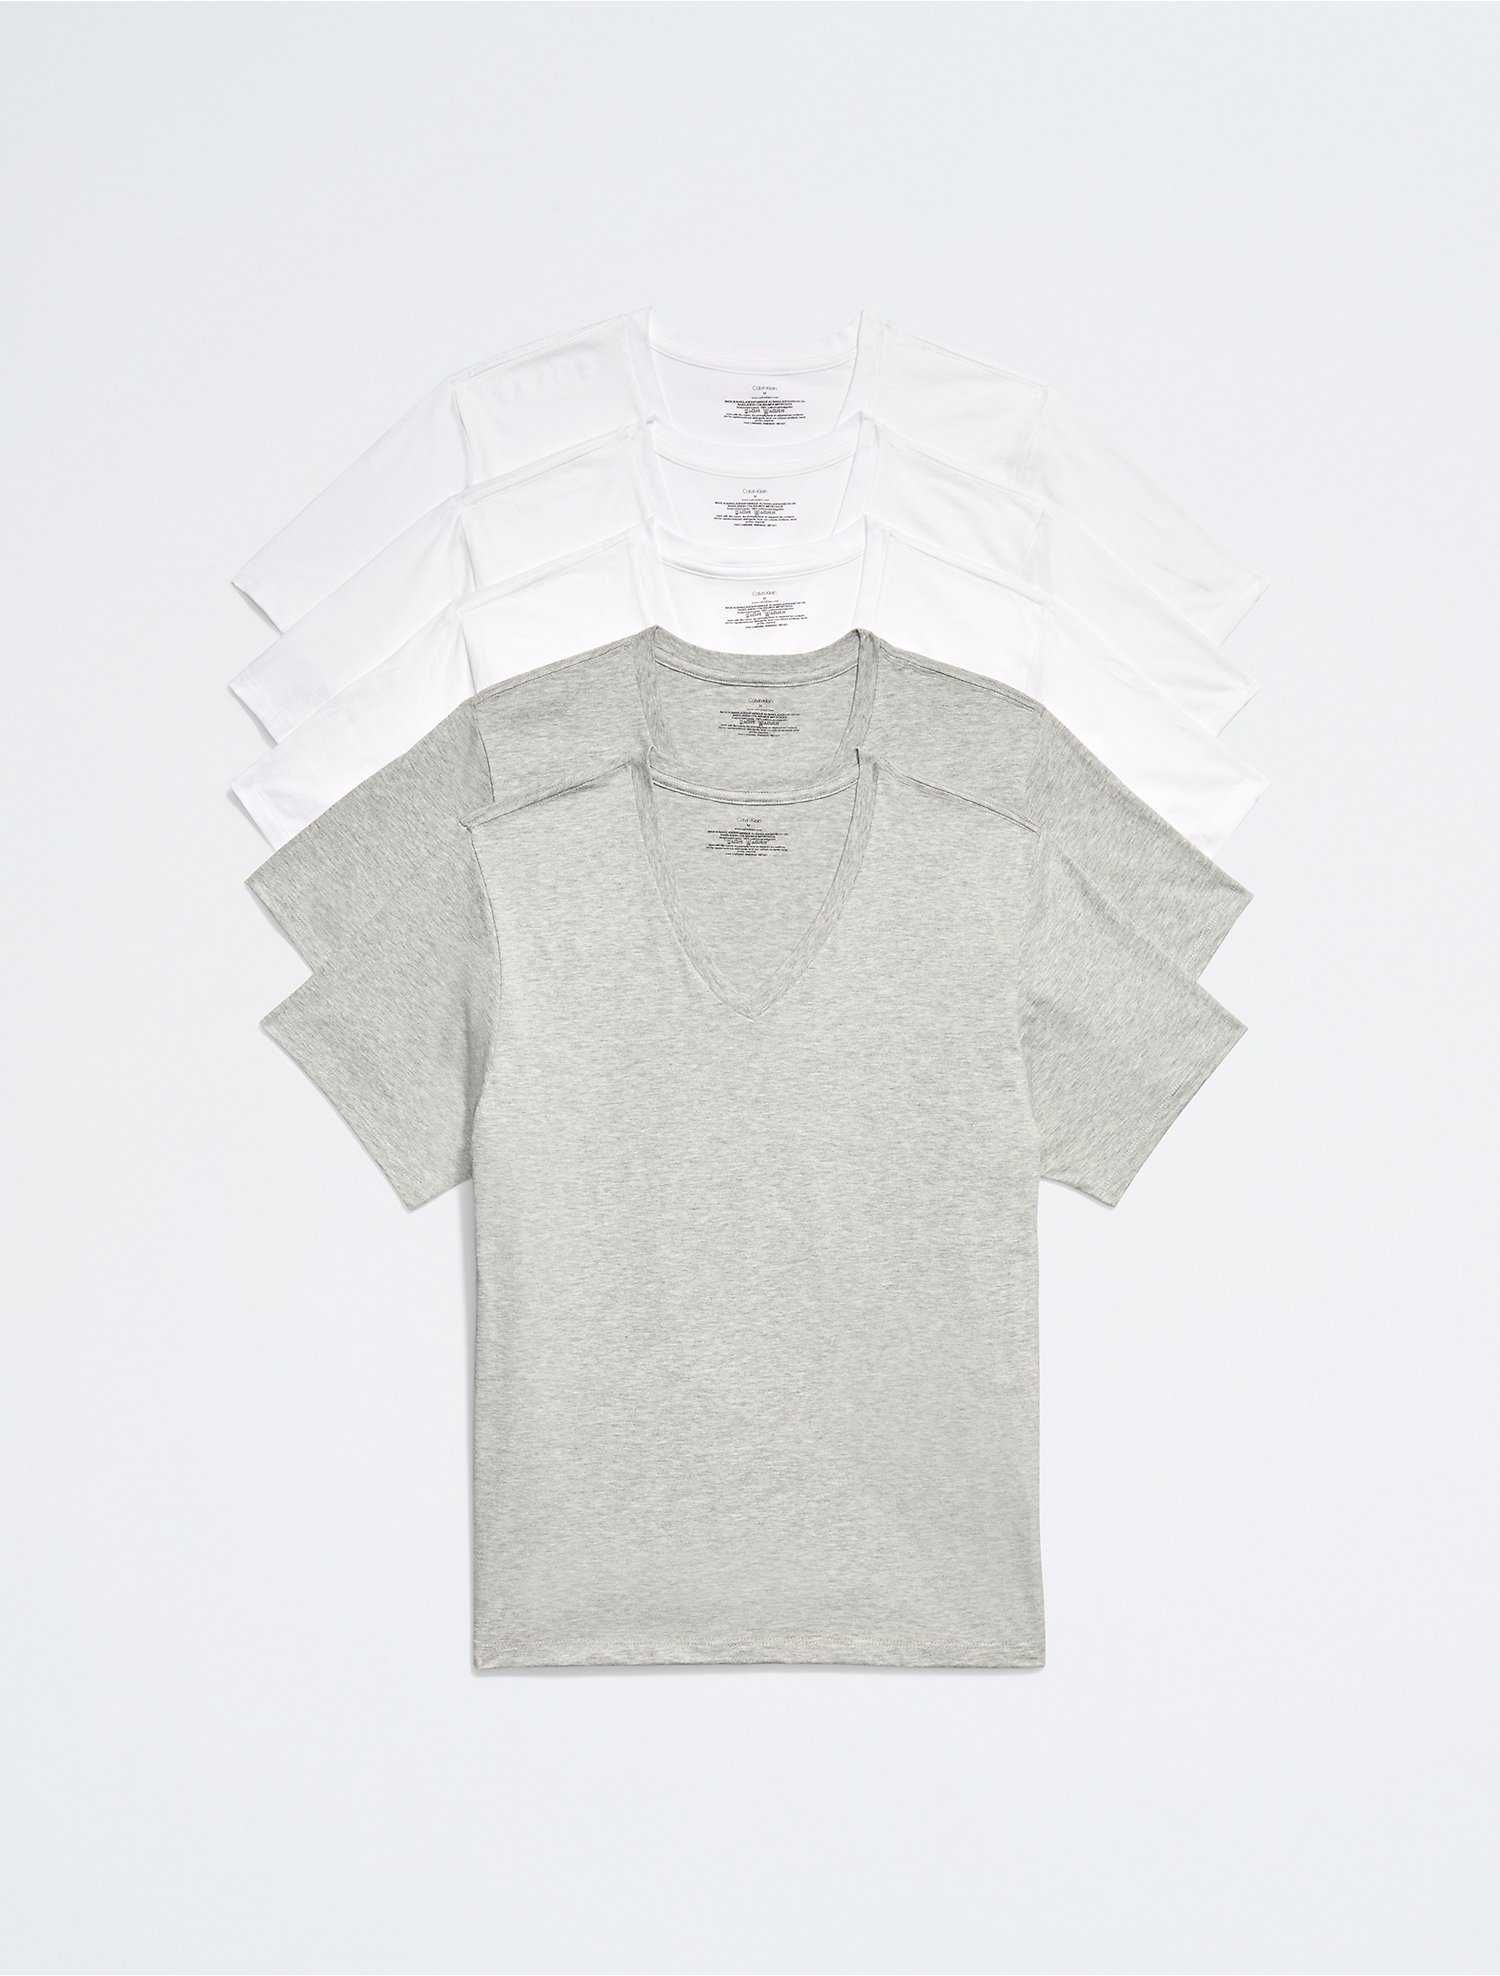 Новый набор calvin klein футболки (ck 5-pack multi) с Америки M,L